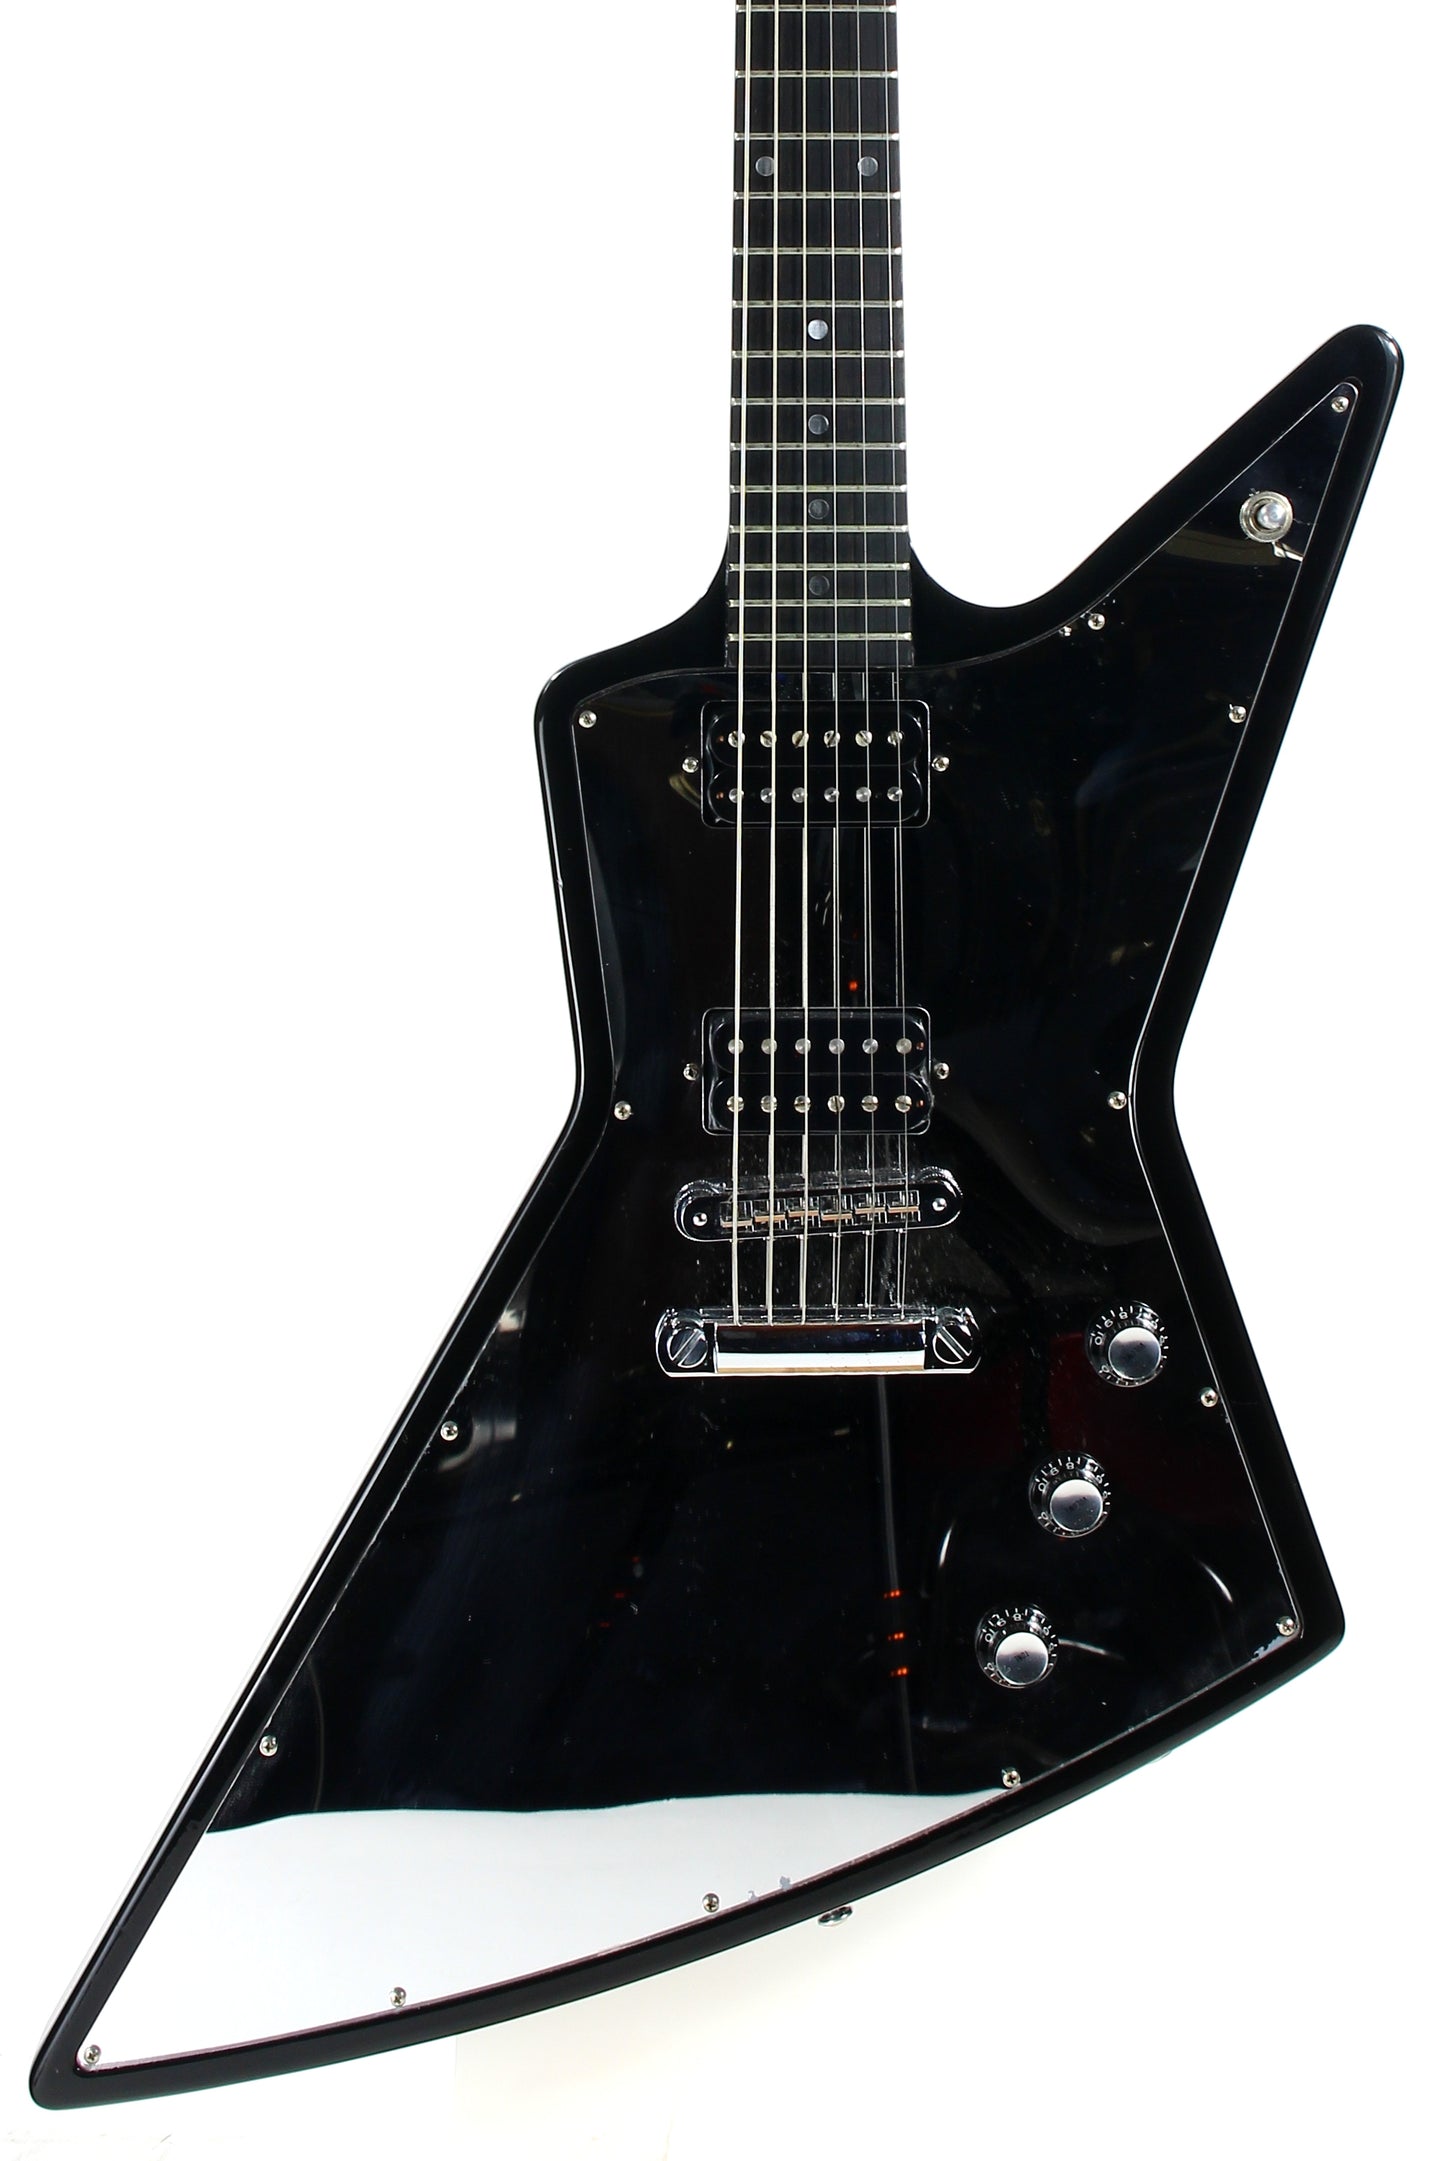 2006 Gibson Limited Edition New Century Explorer Mirror Ebony - GOTW #36 Guitar of the Week, X-Plorer